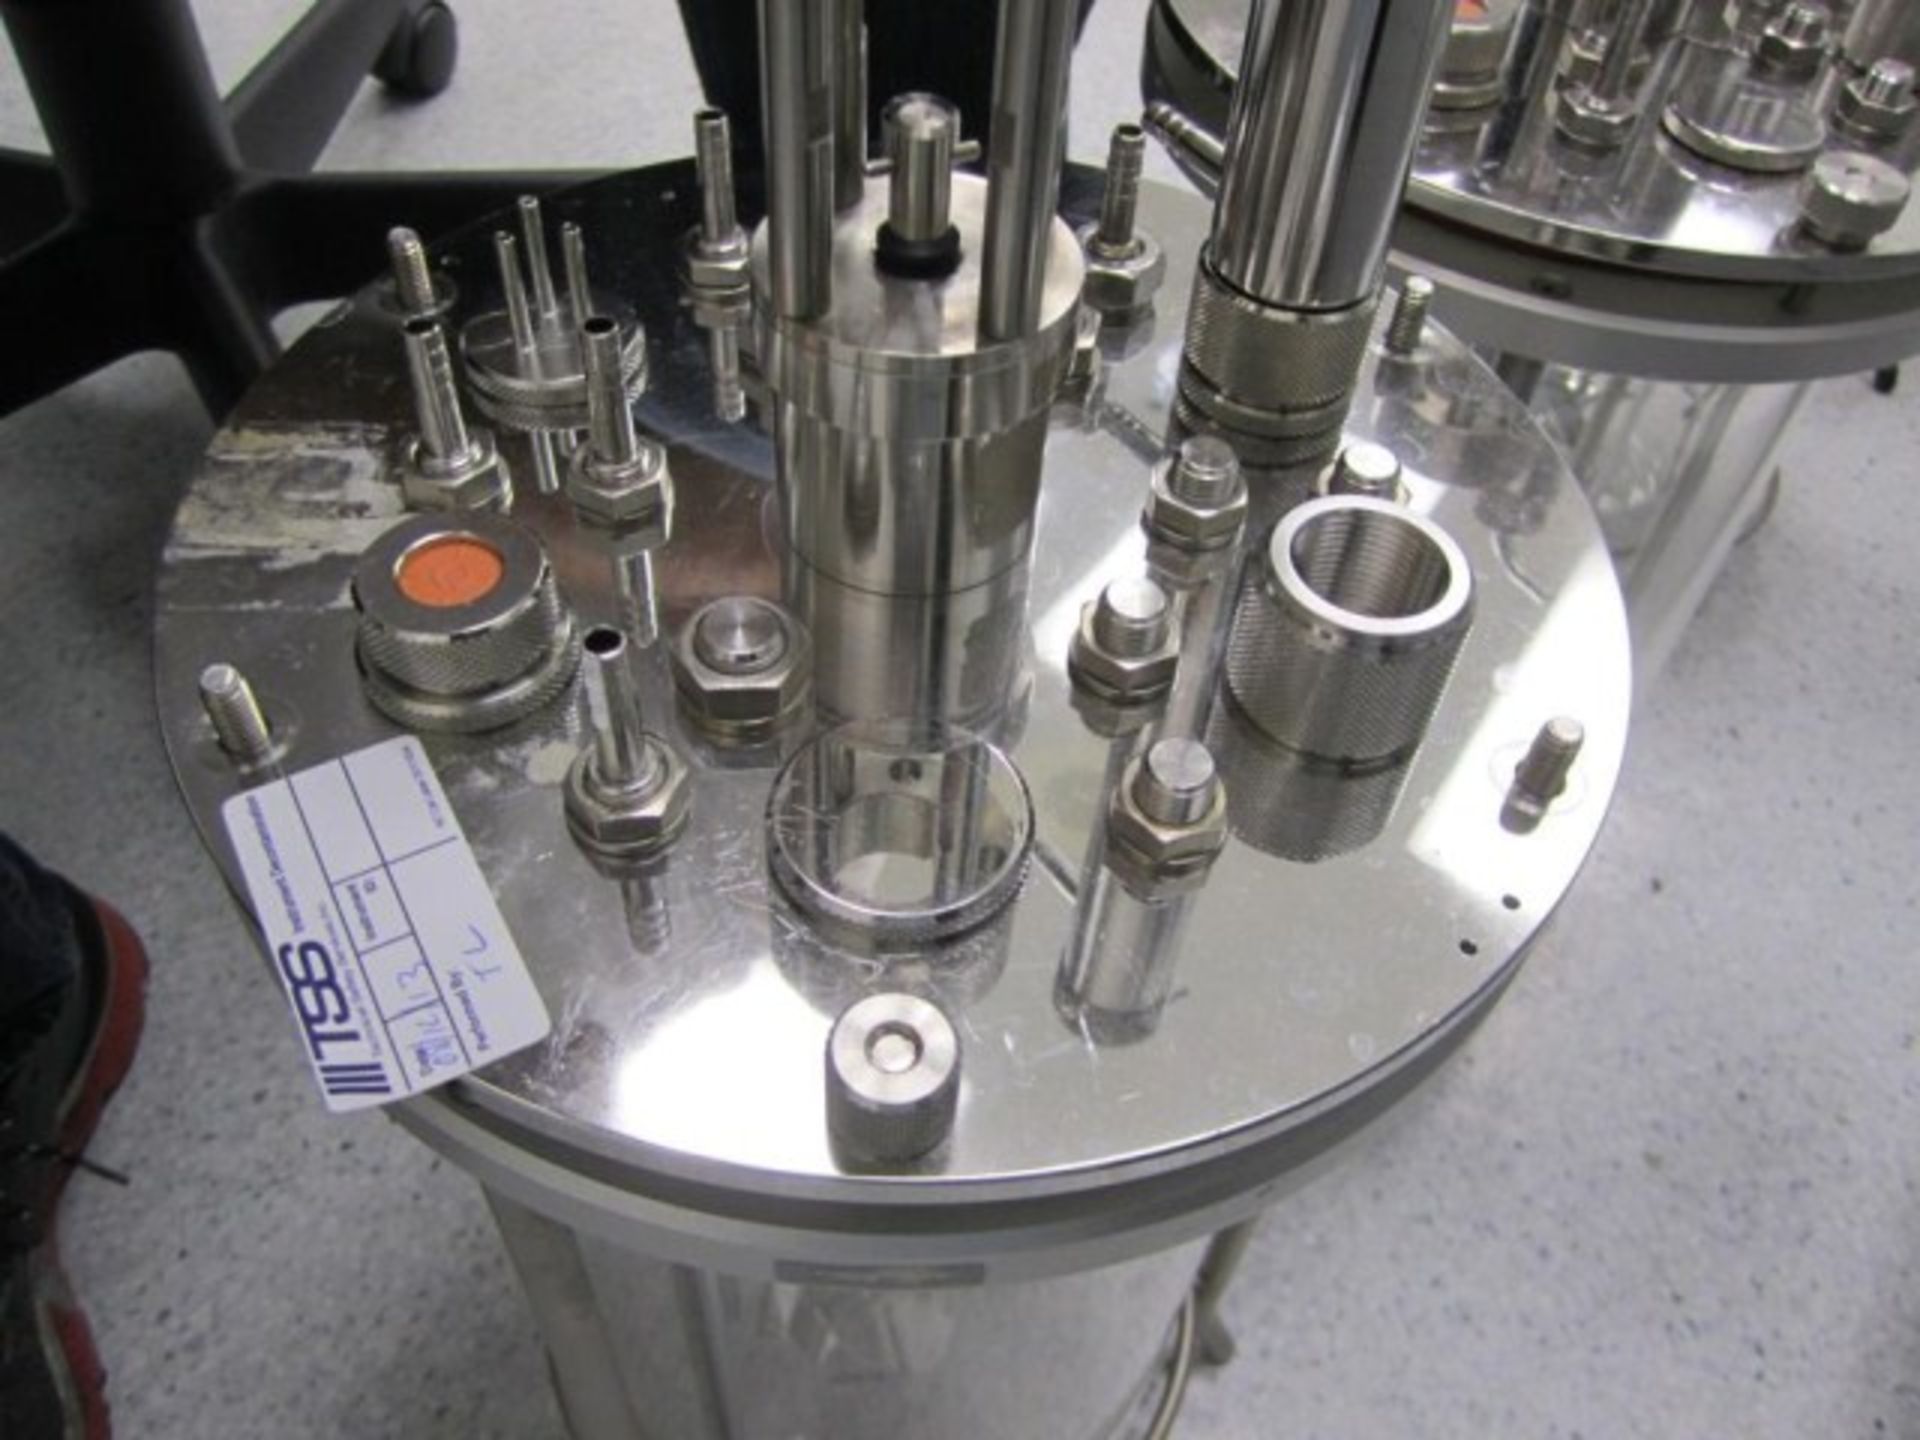 Applikon Biotechnology 7 Liter Autoclavable Glass Bioreactor Fermentor Vessel - Image 2 of 3